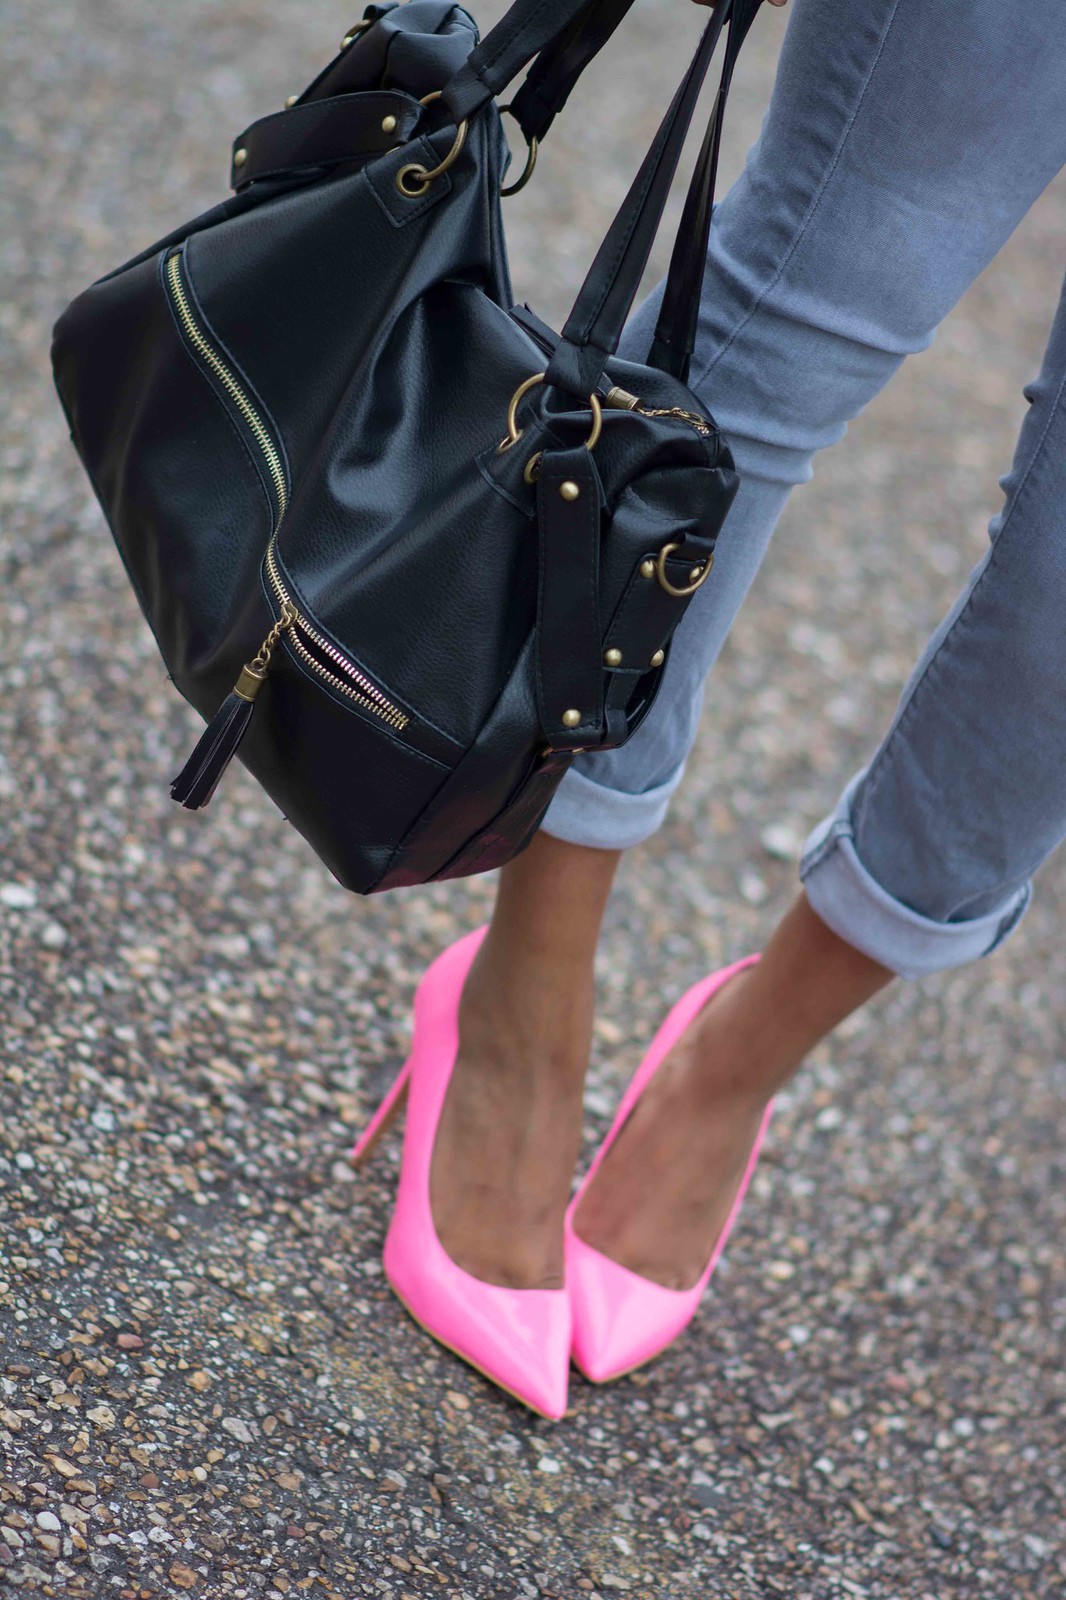 pink patent leather pumps gojane heels